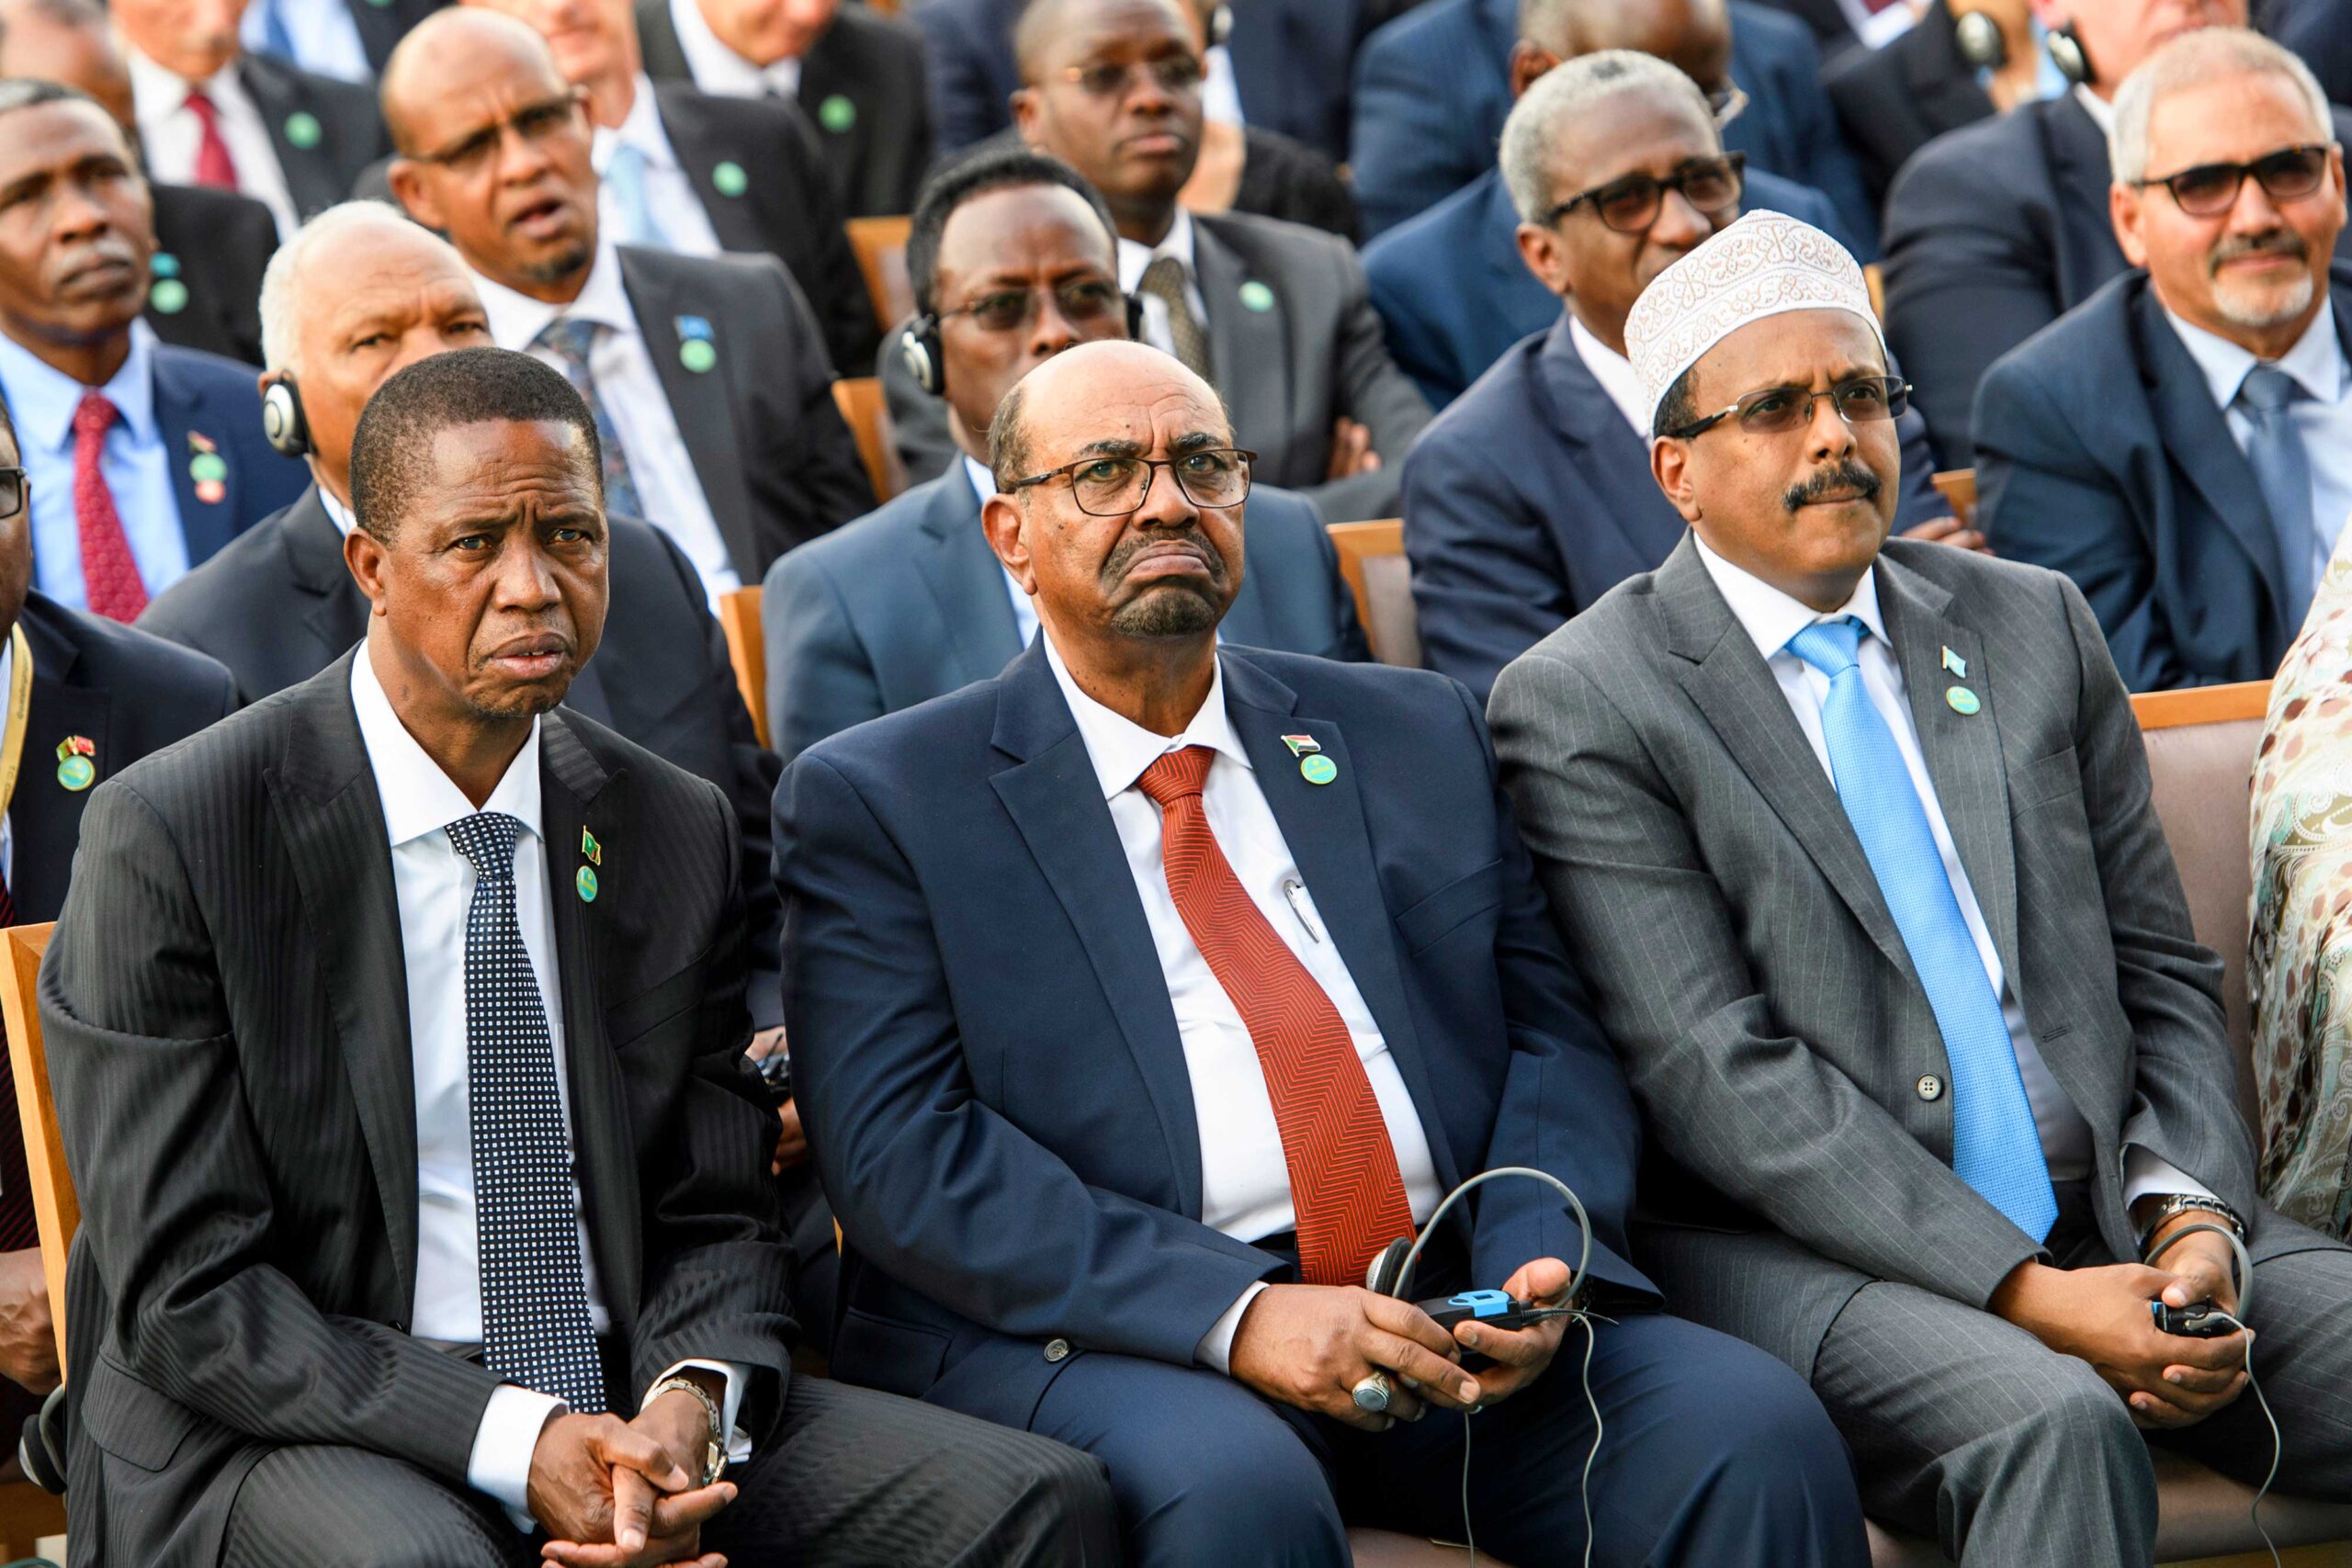 Omar al-Bashir and Sudan